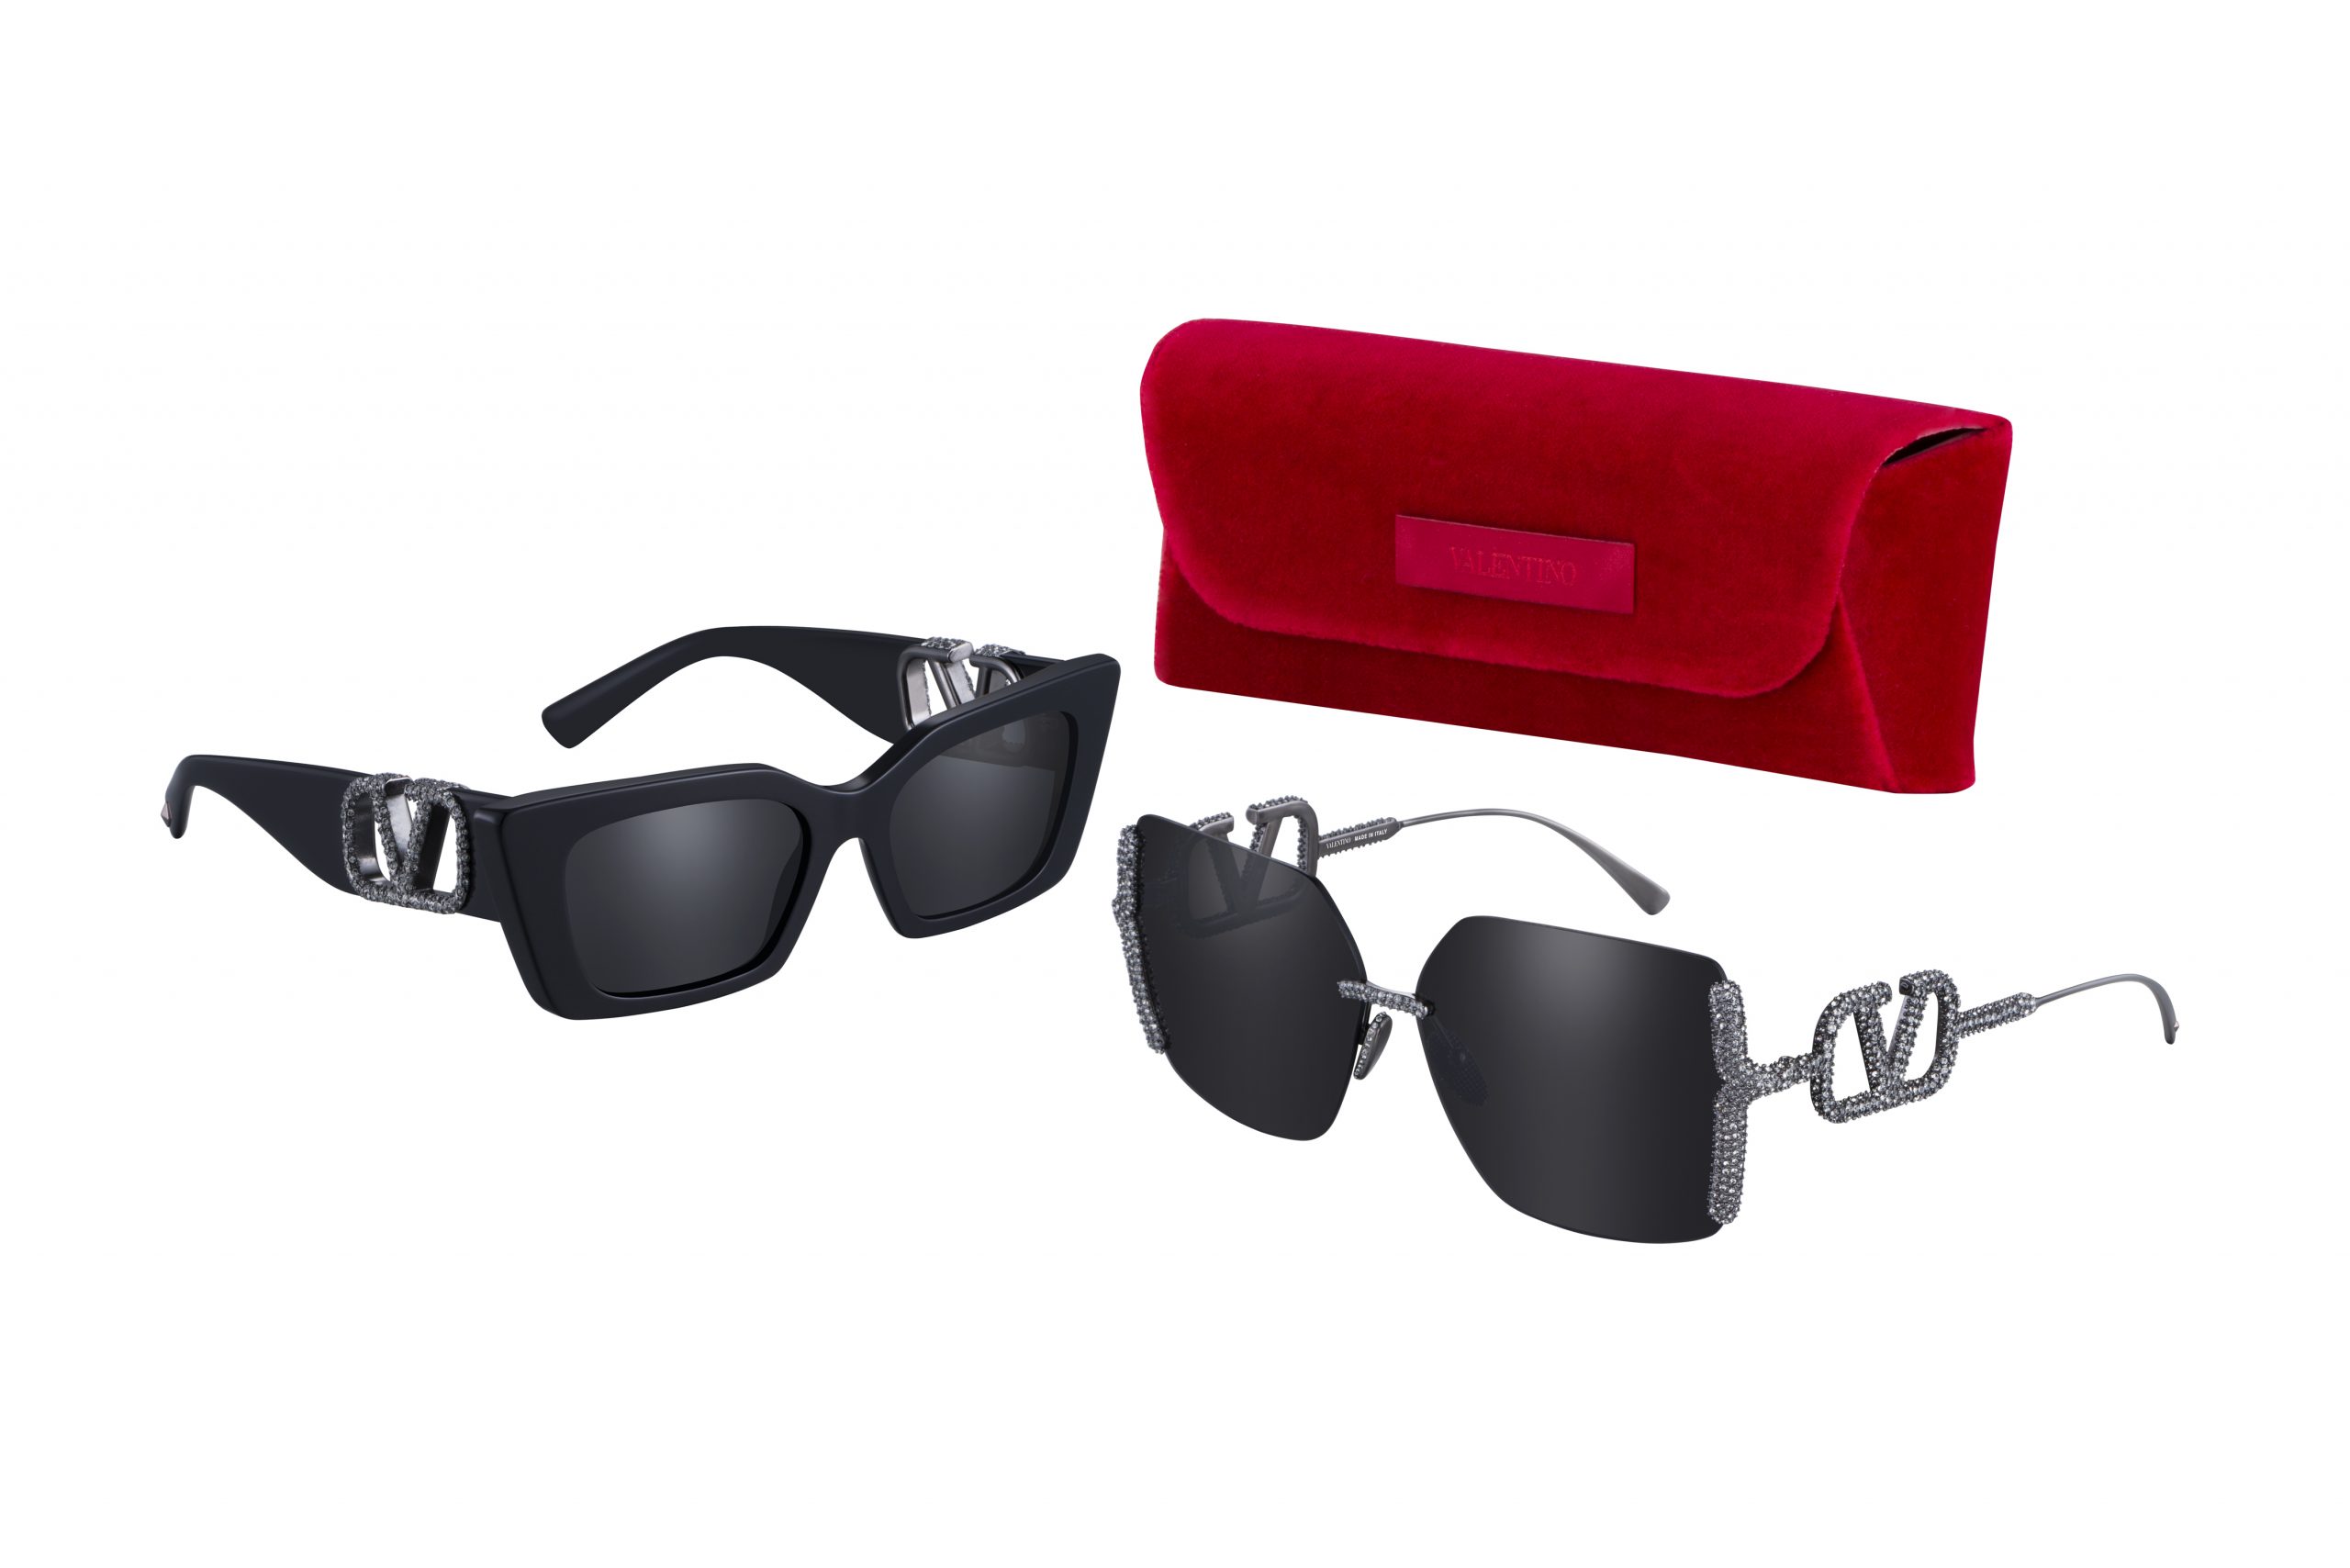 Velentino resort 2020 eyewear collection